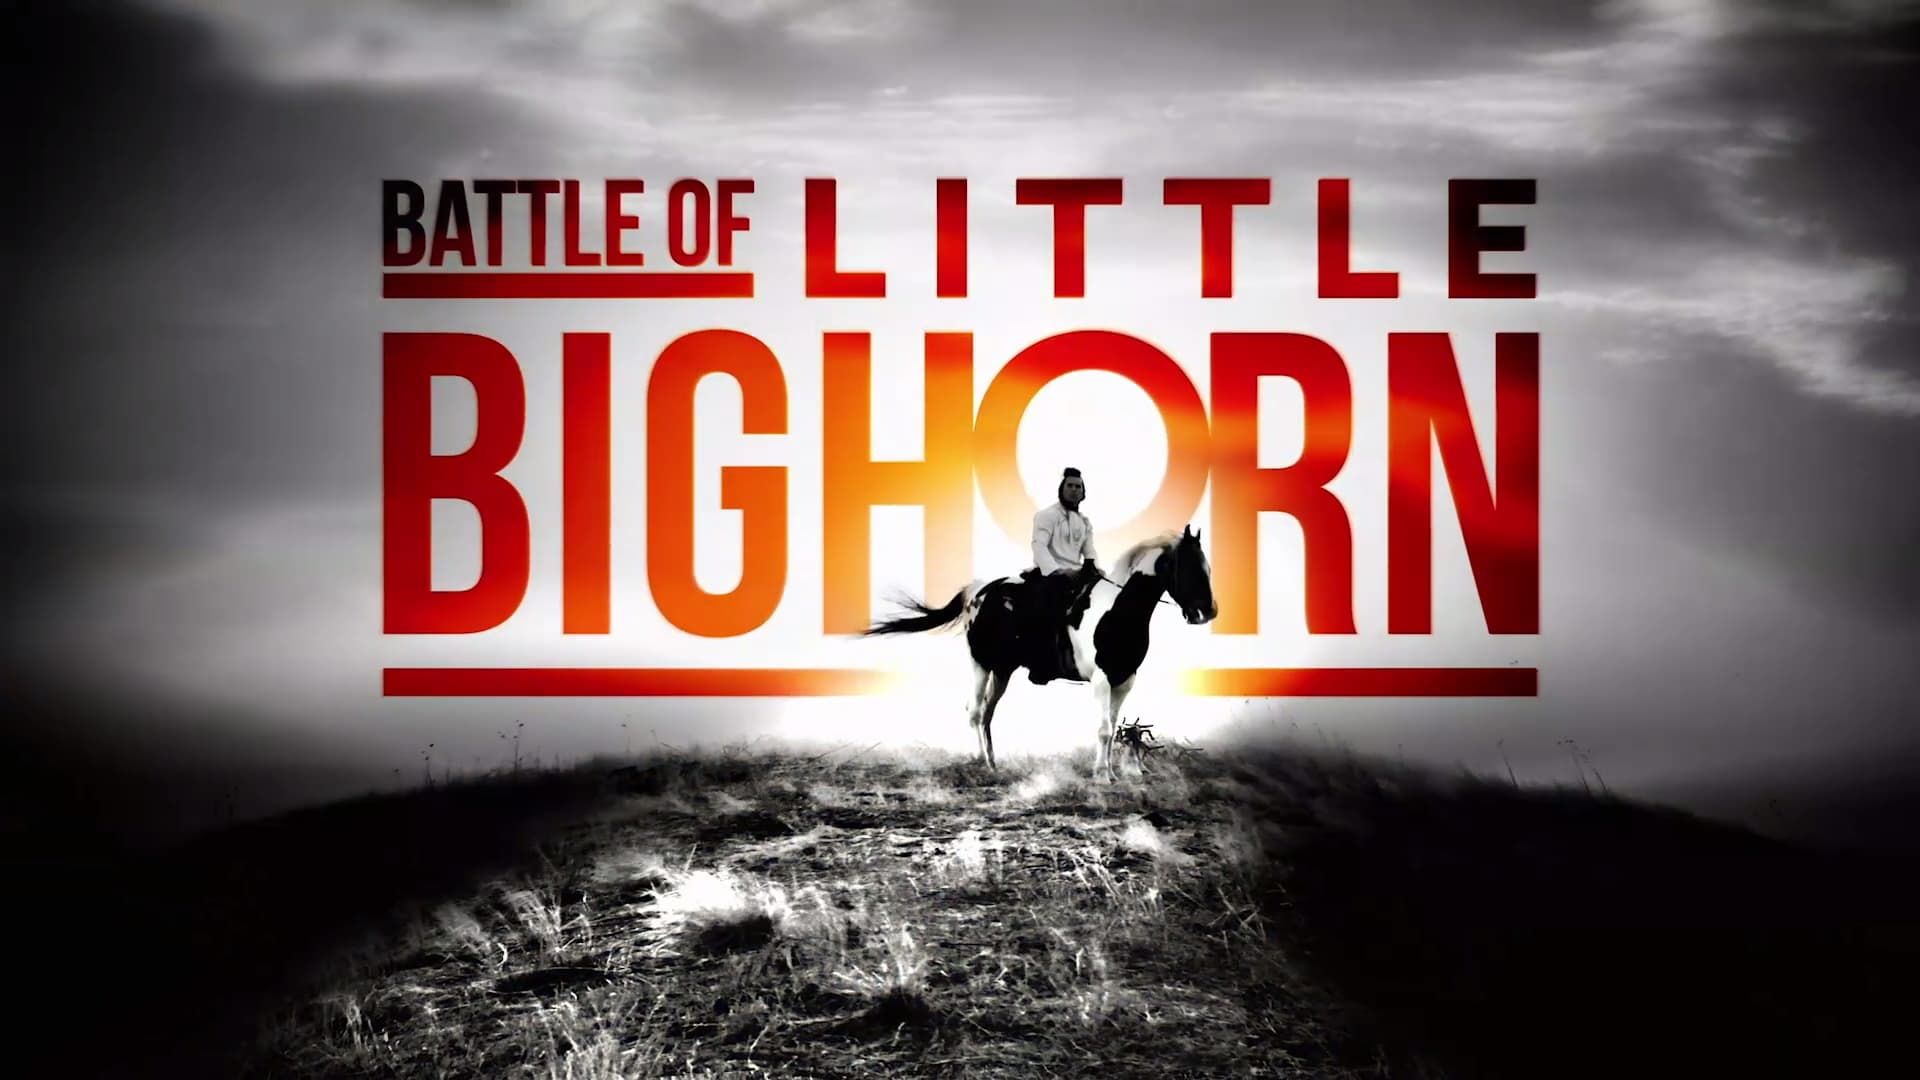 Battle of Little Bighorn background